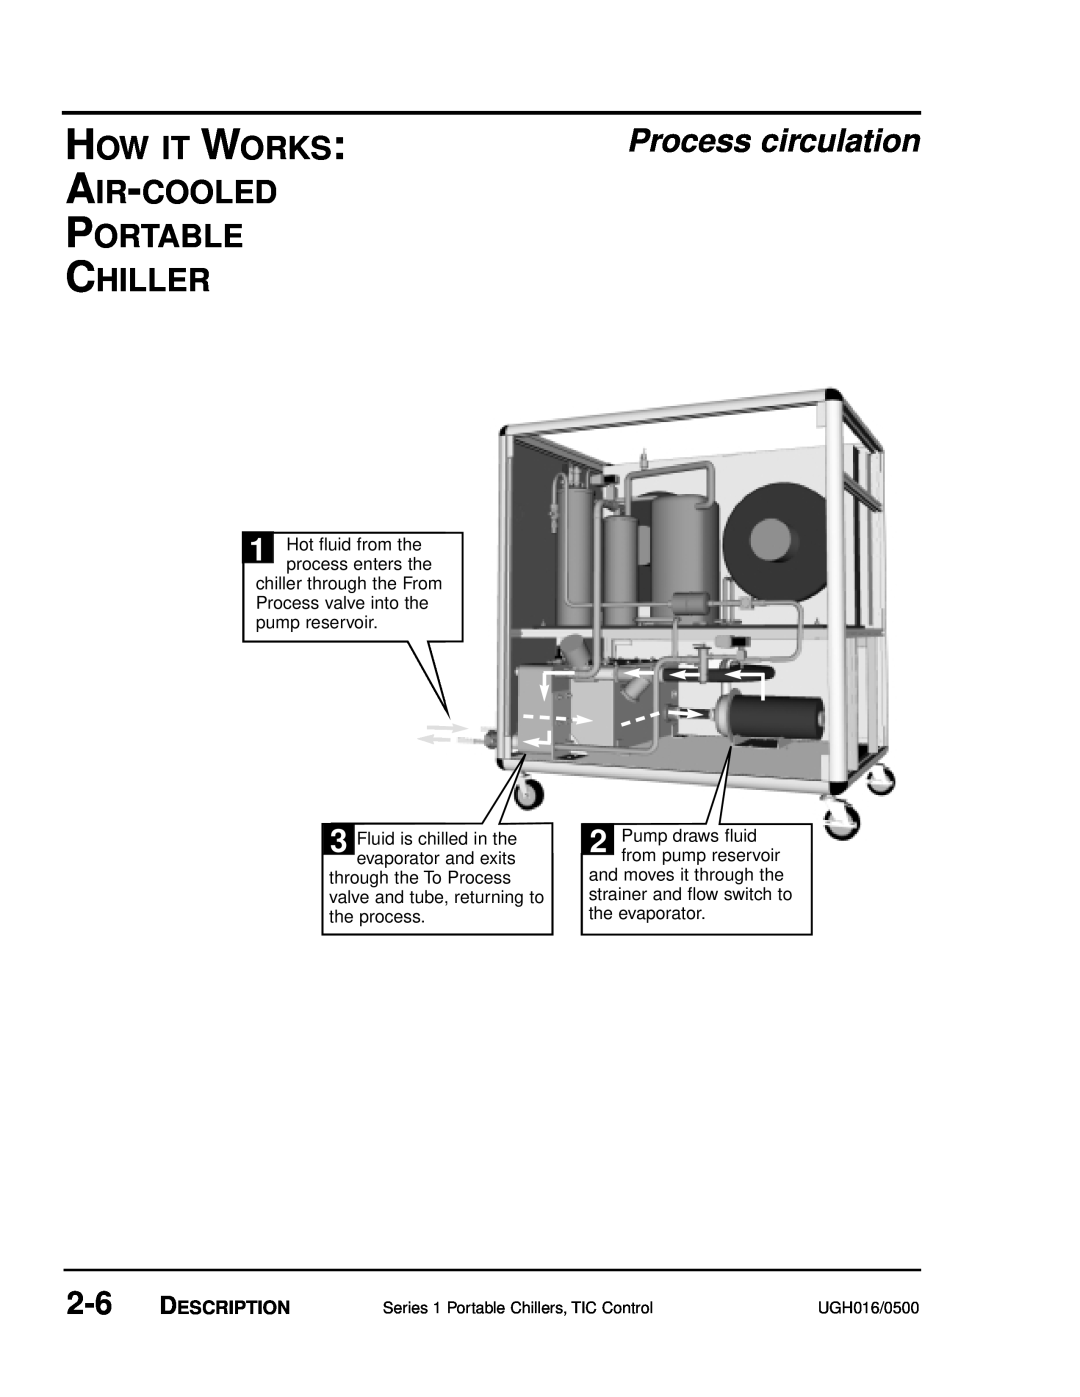 Conair UGH016/0500 manual How It Works Air-Cooled Portable Chiller, Description 